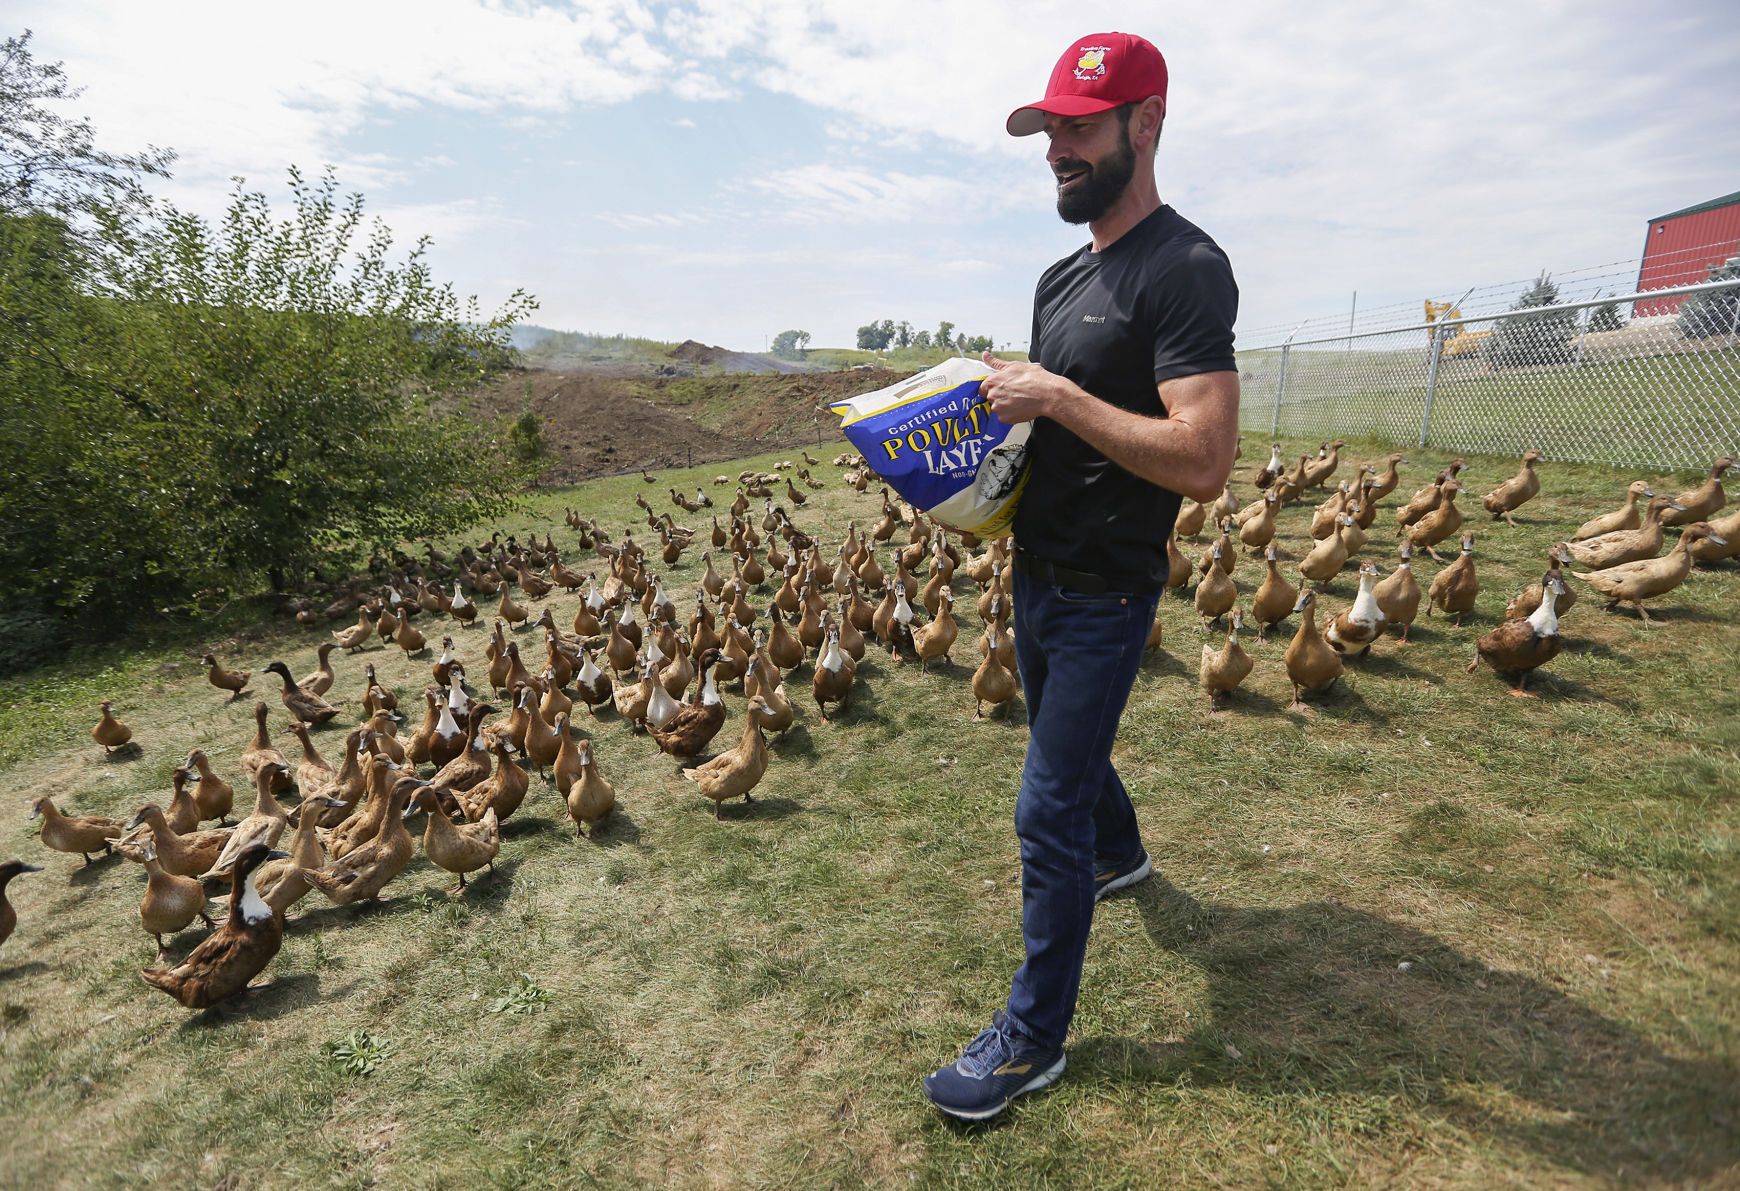 Owner Jeff Friedman feeds the ducks at Treeline Farm in Zwingle, Iowa, on Friday, Aug. 28, 2020. PHOTO CREDIT: NICKI KOHL